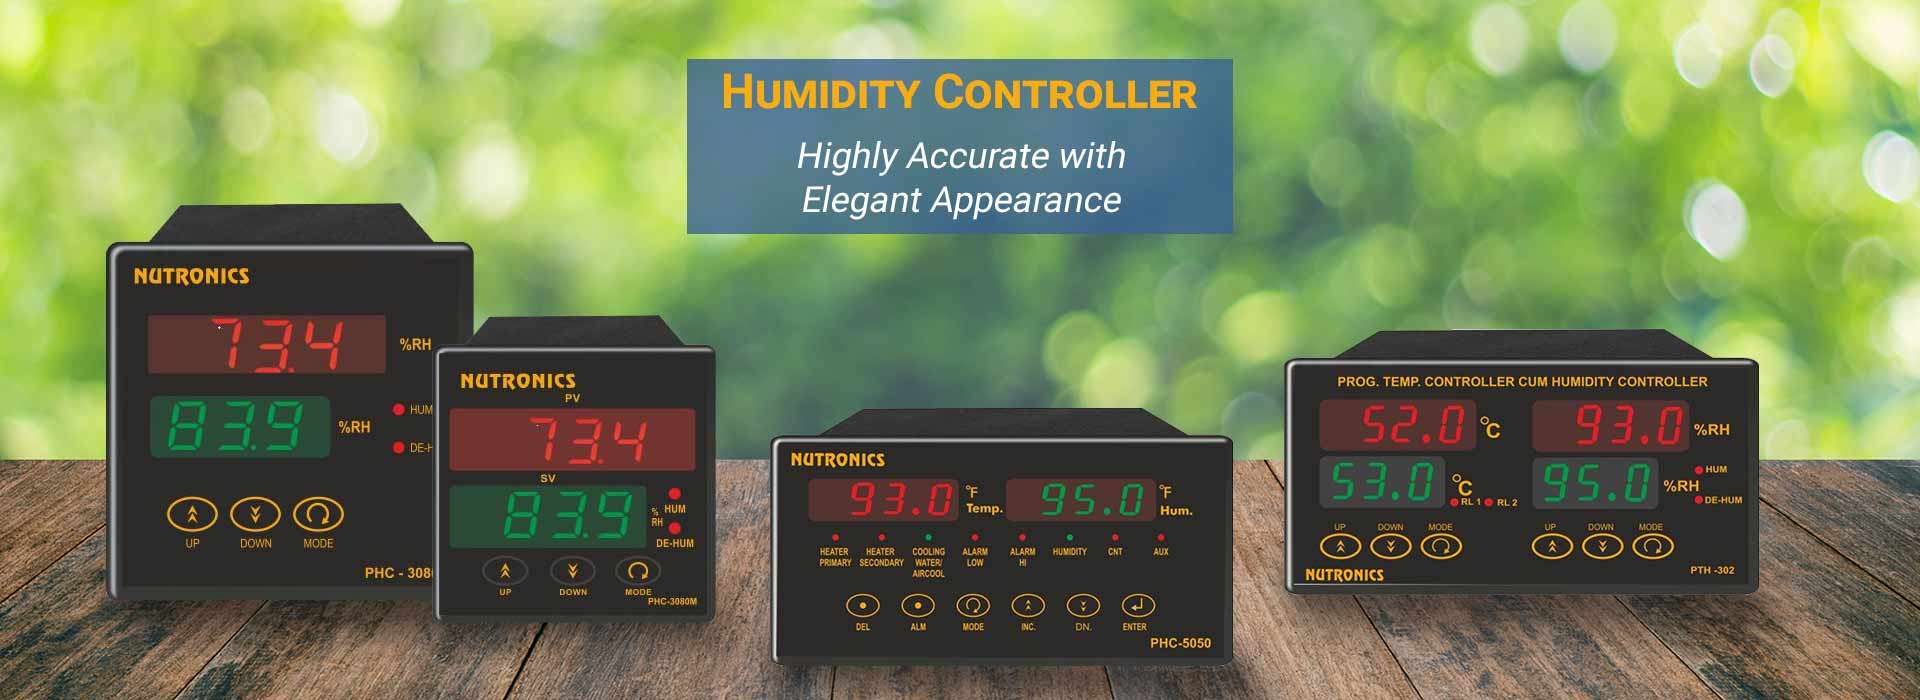  Humidity controller Manufacturers in Vijayawada